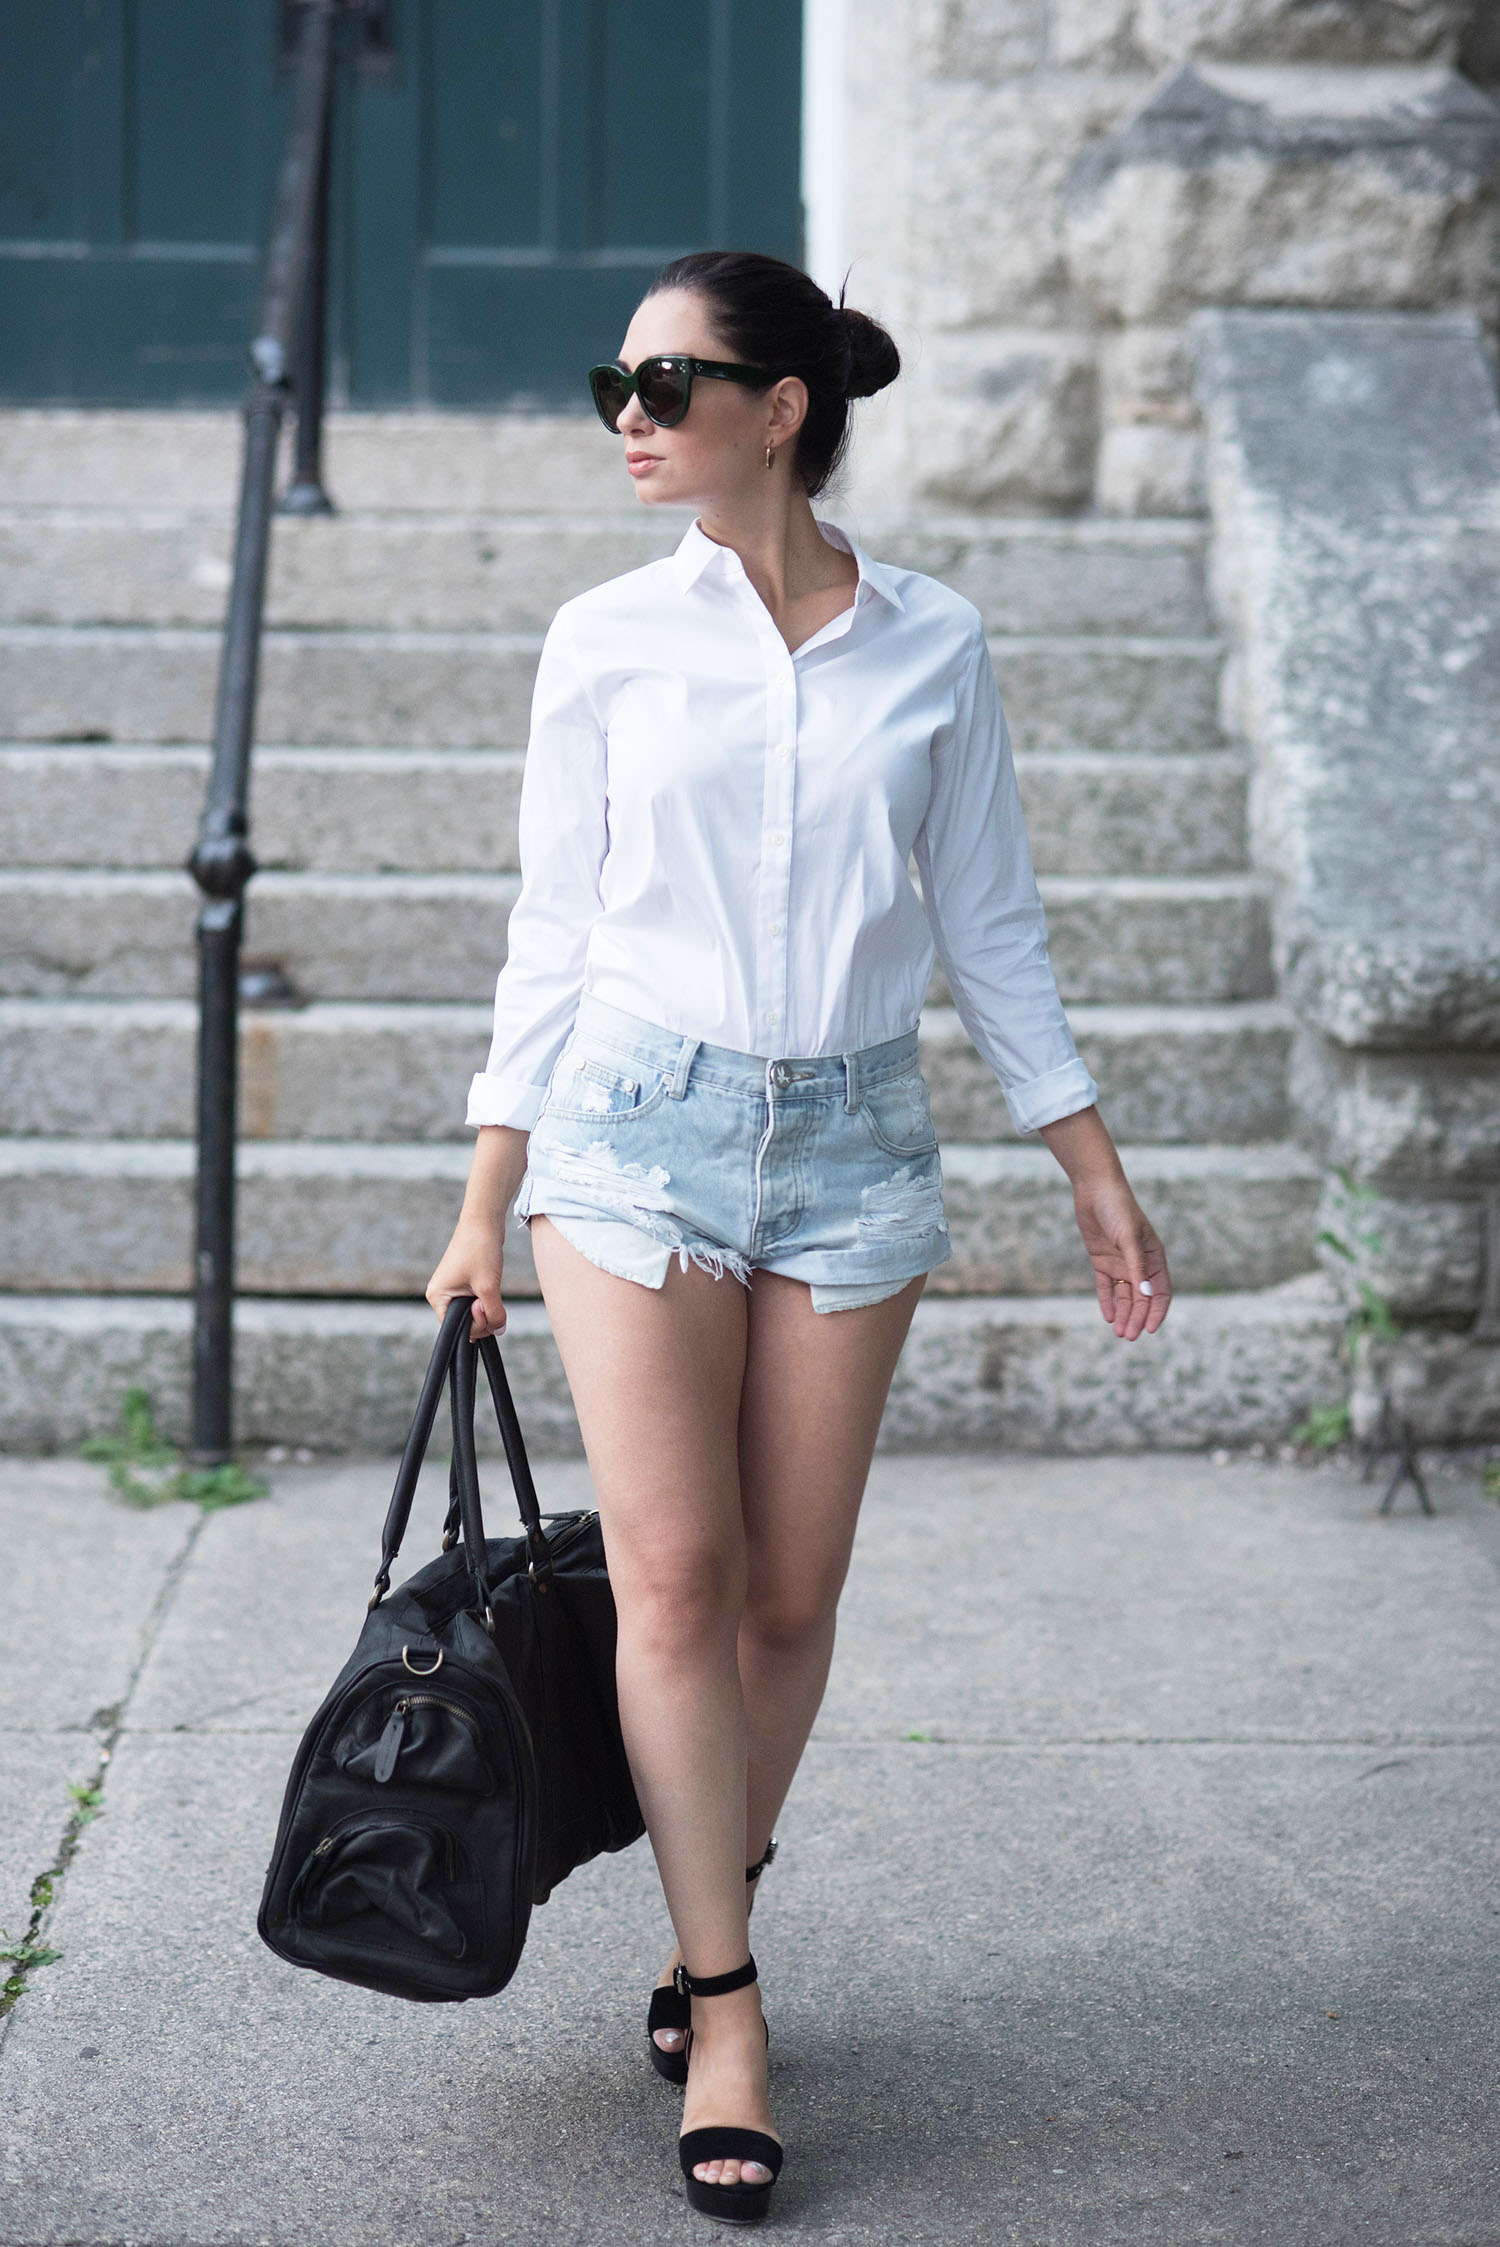 Canadian fashion blogger Cee Fardoe of Coco & Vera walks down the street wearing One Teaspoon denim shorts and carrying a Mahi Leather duffle bag